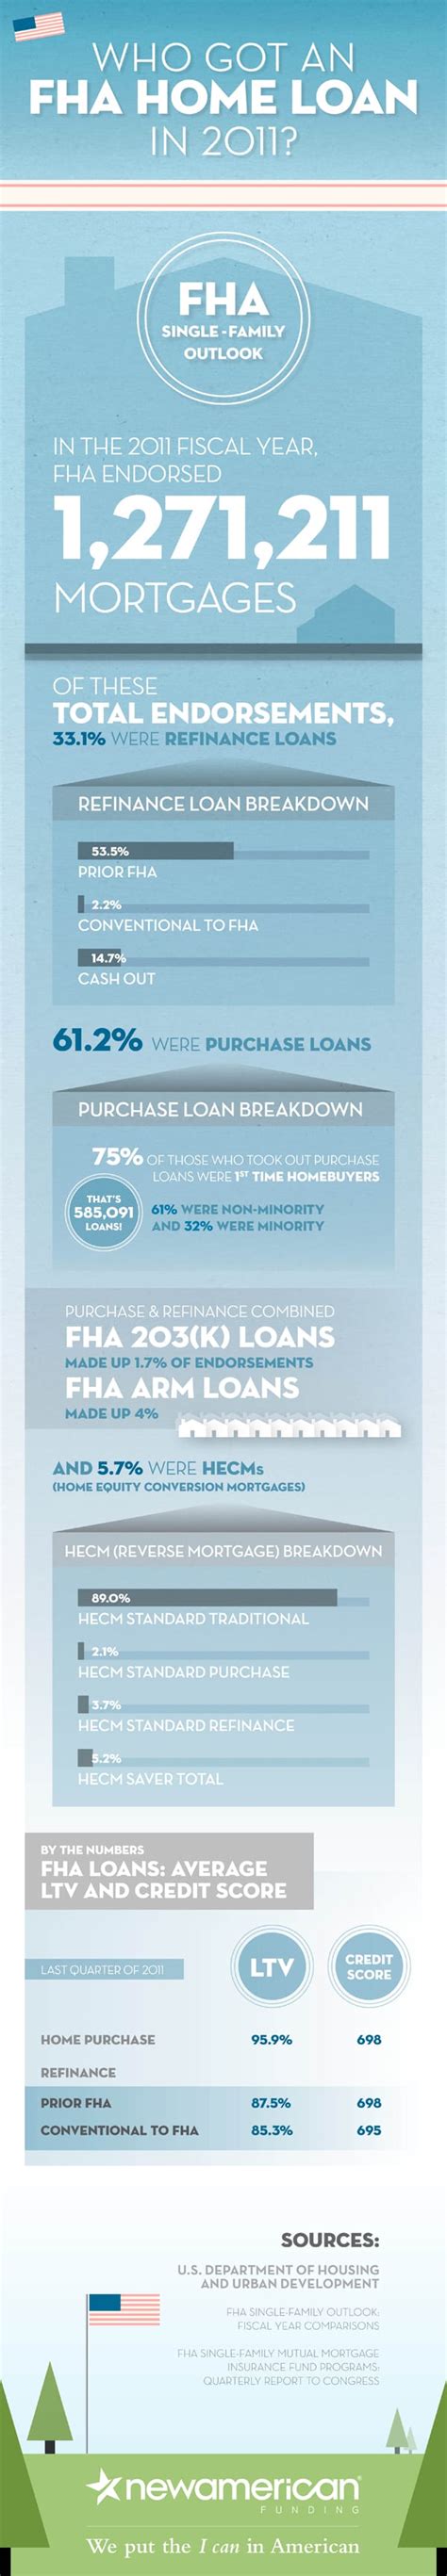 fha home loan infographic  american funding